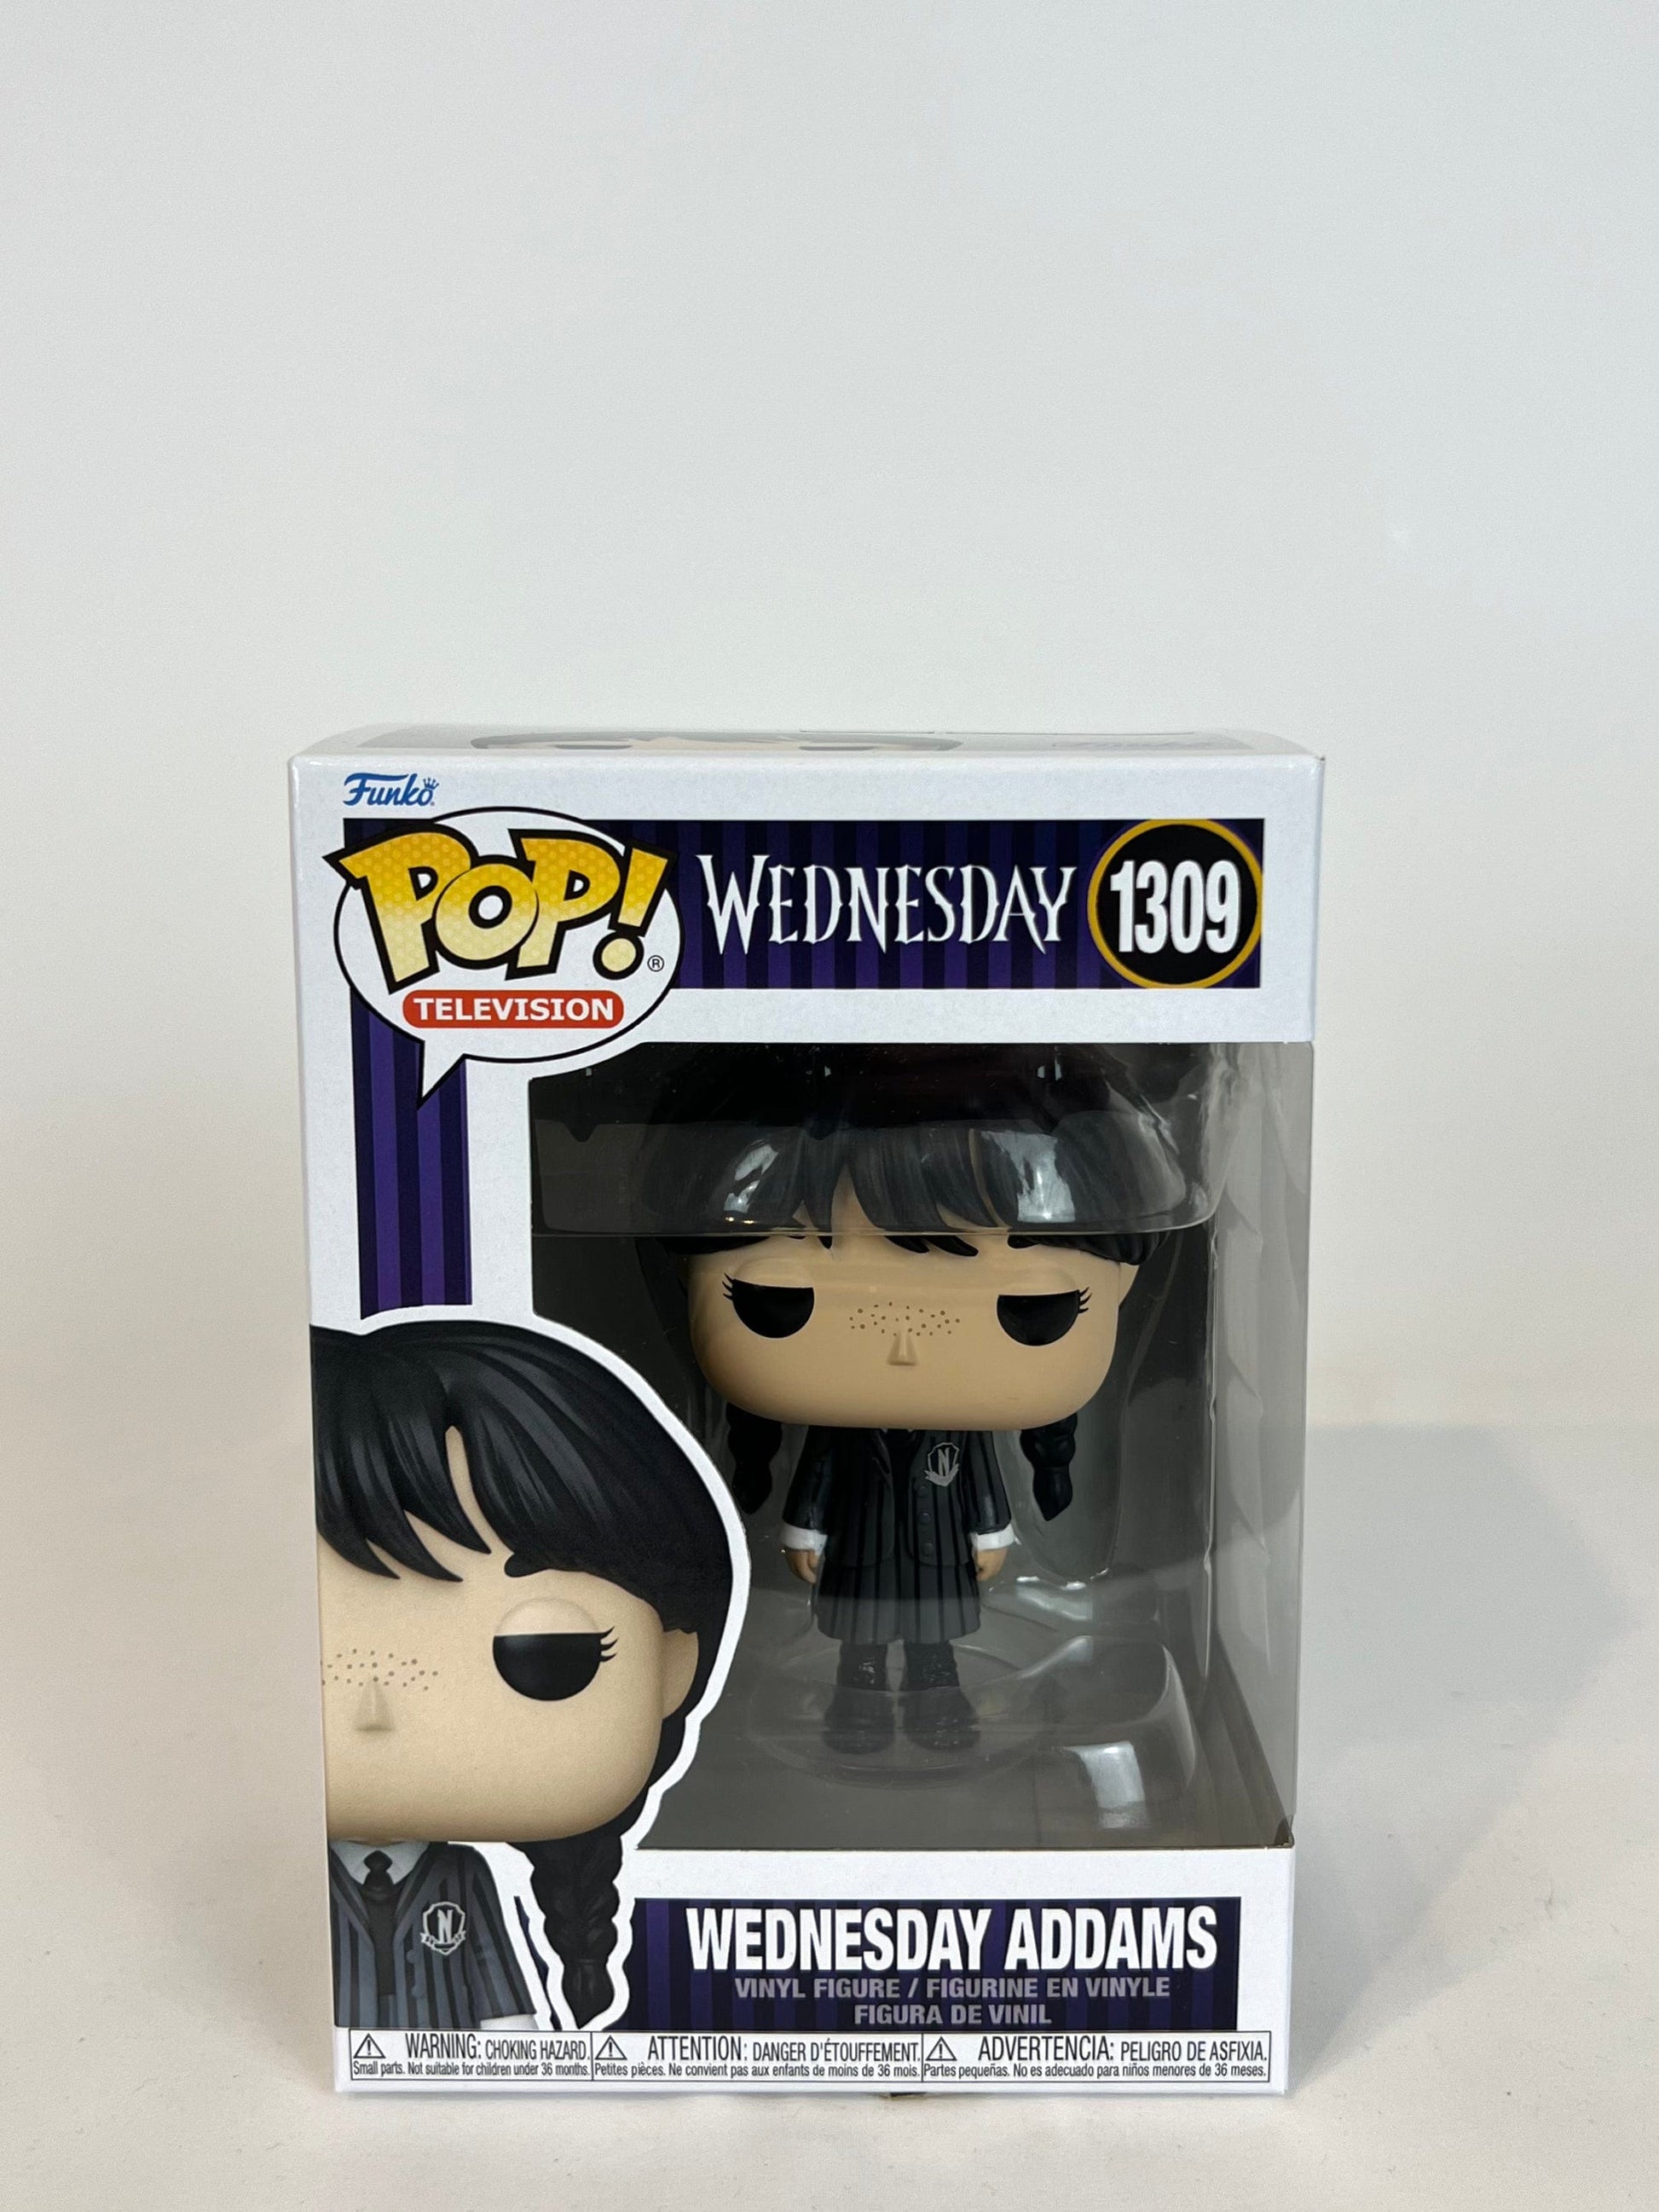 POP:Wednesday- Wednesday Addams